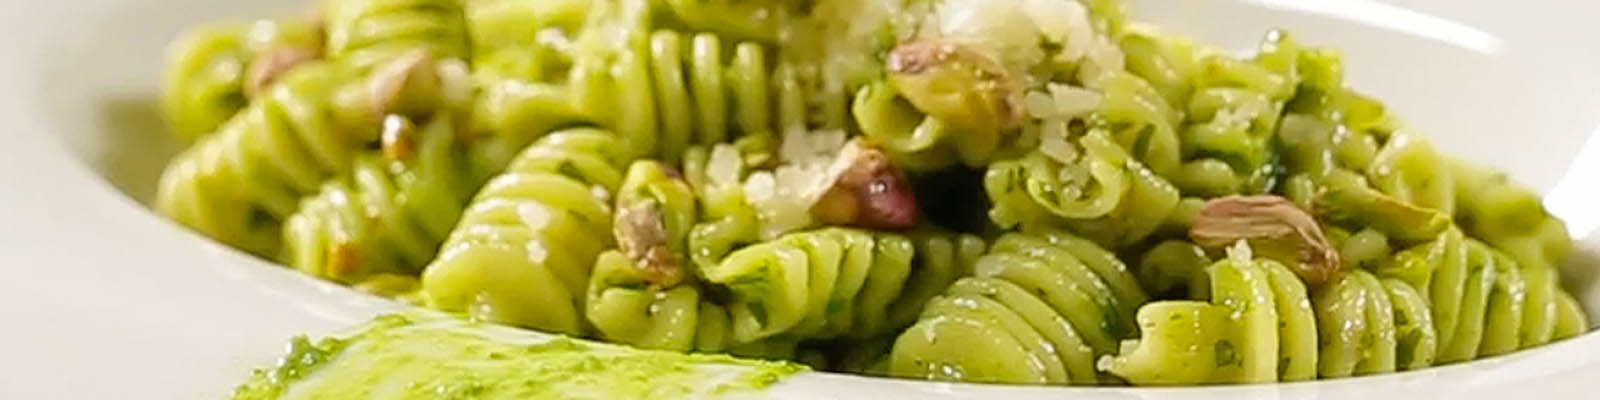 Pasta Garofalo - Radiatori Garofalo with rocket and pistachio pesto